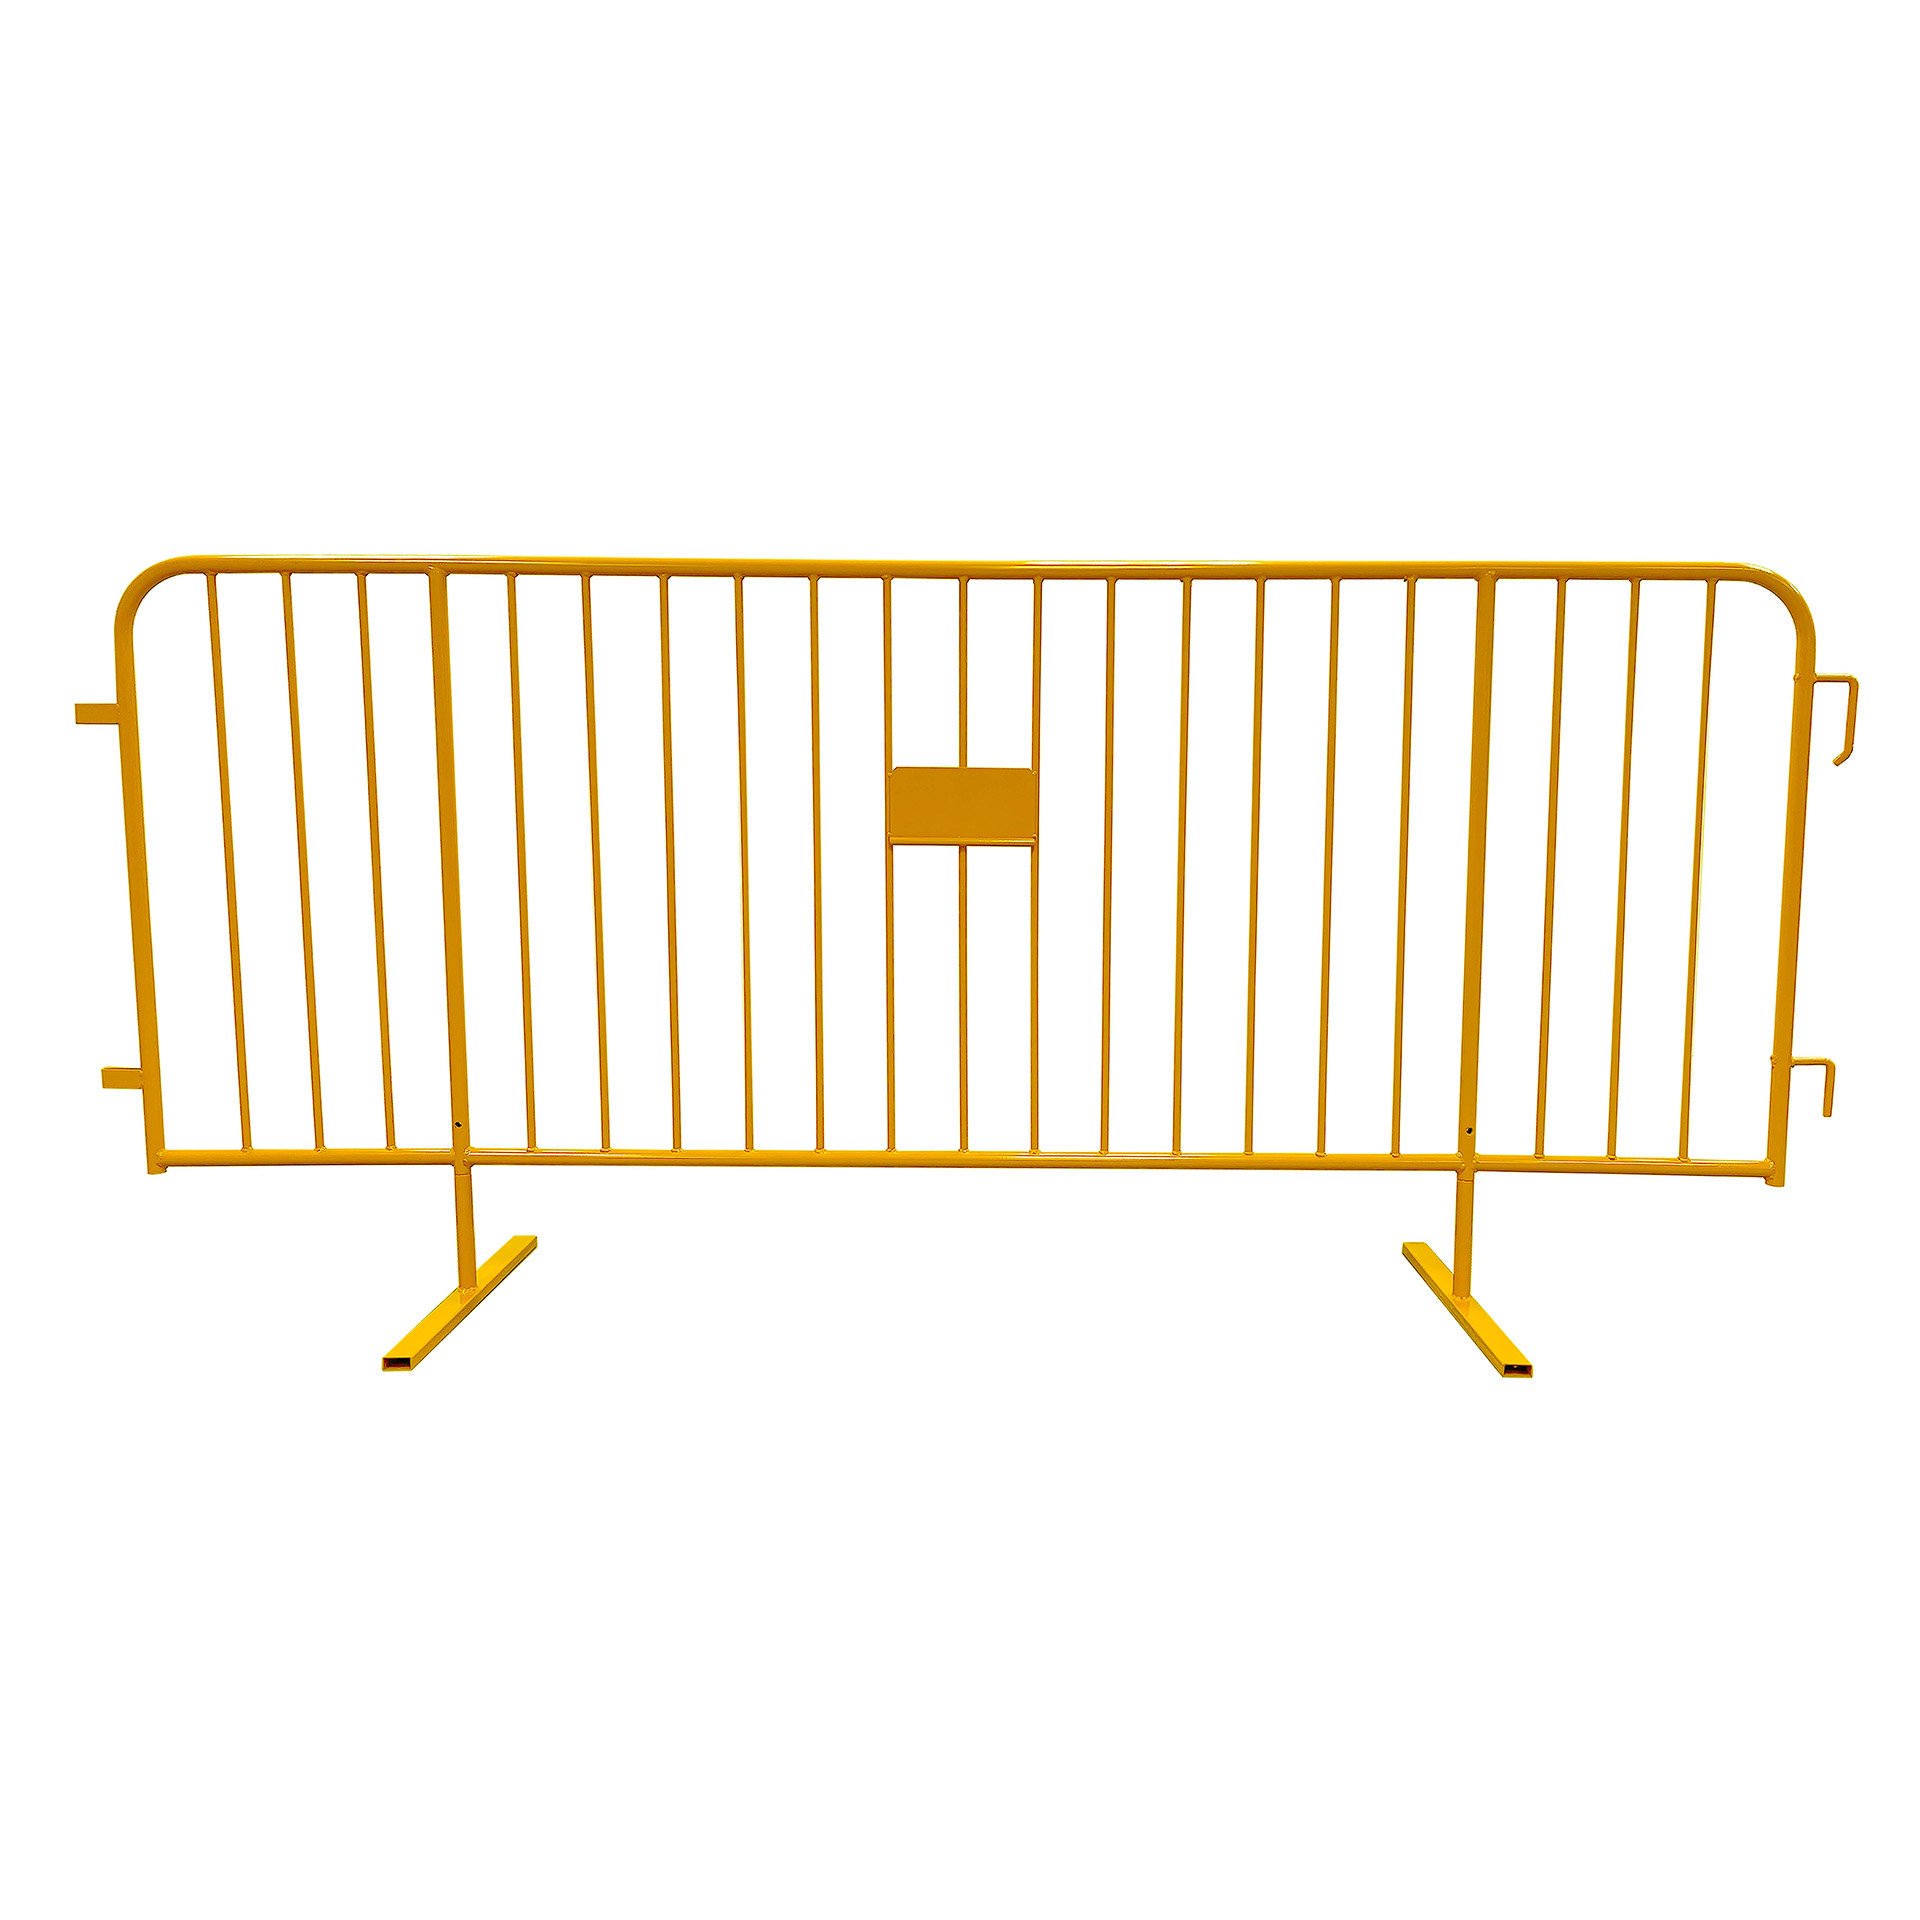 yellow barricade